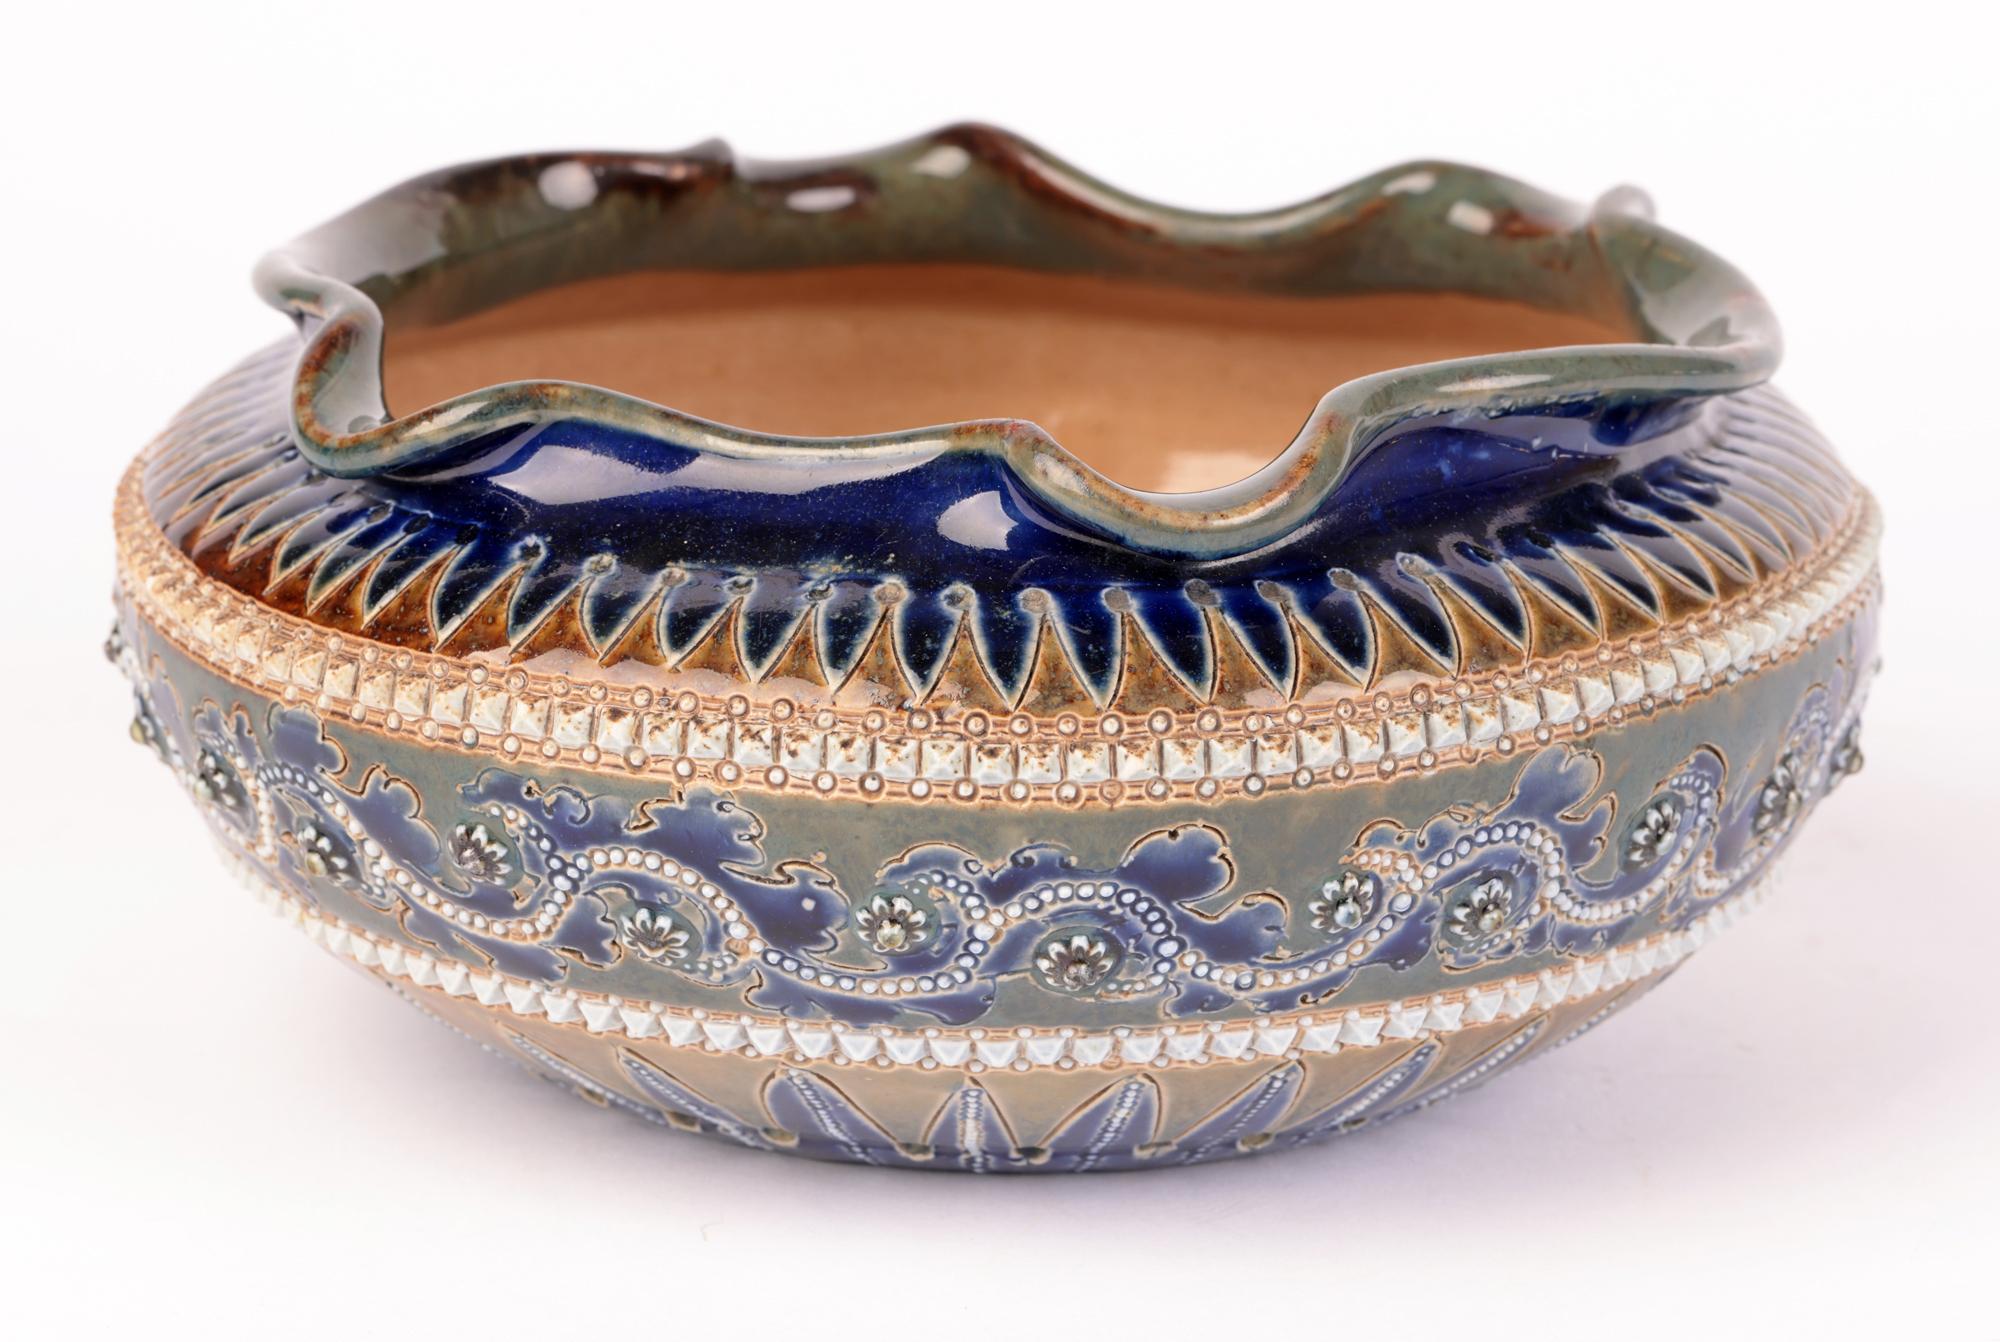 aesthetic bowl designs